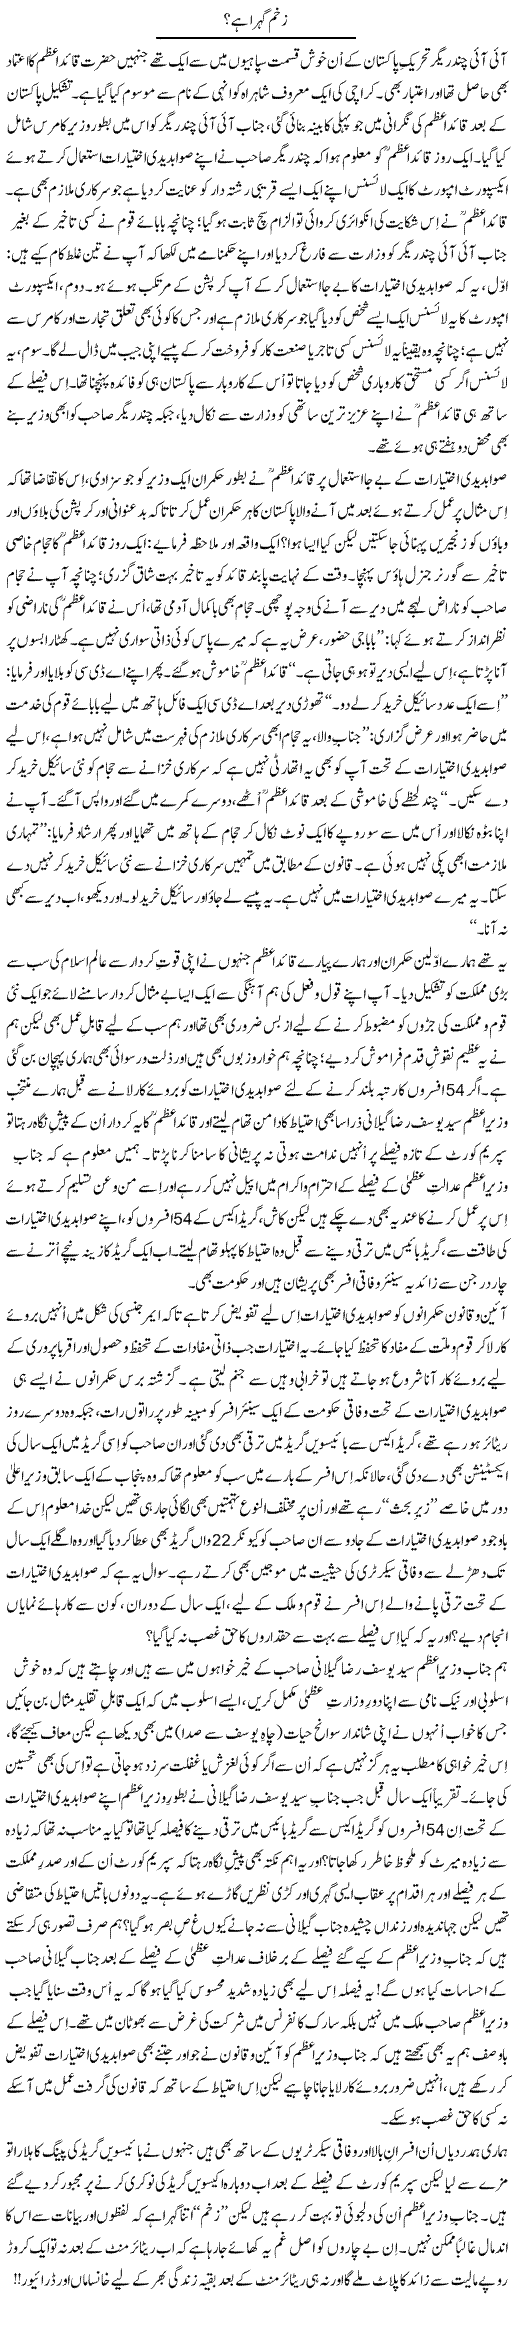 Zakham Gahra hai Express Column Tanvir Qasir 5 May 2010